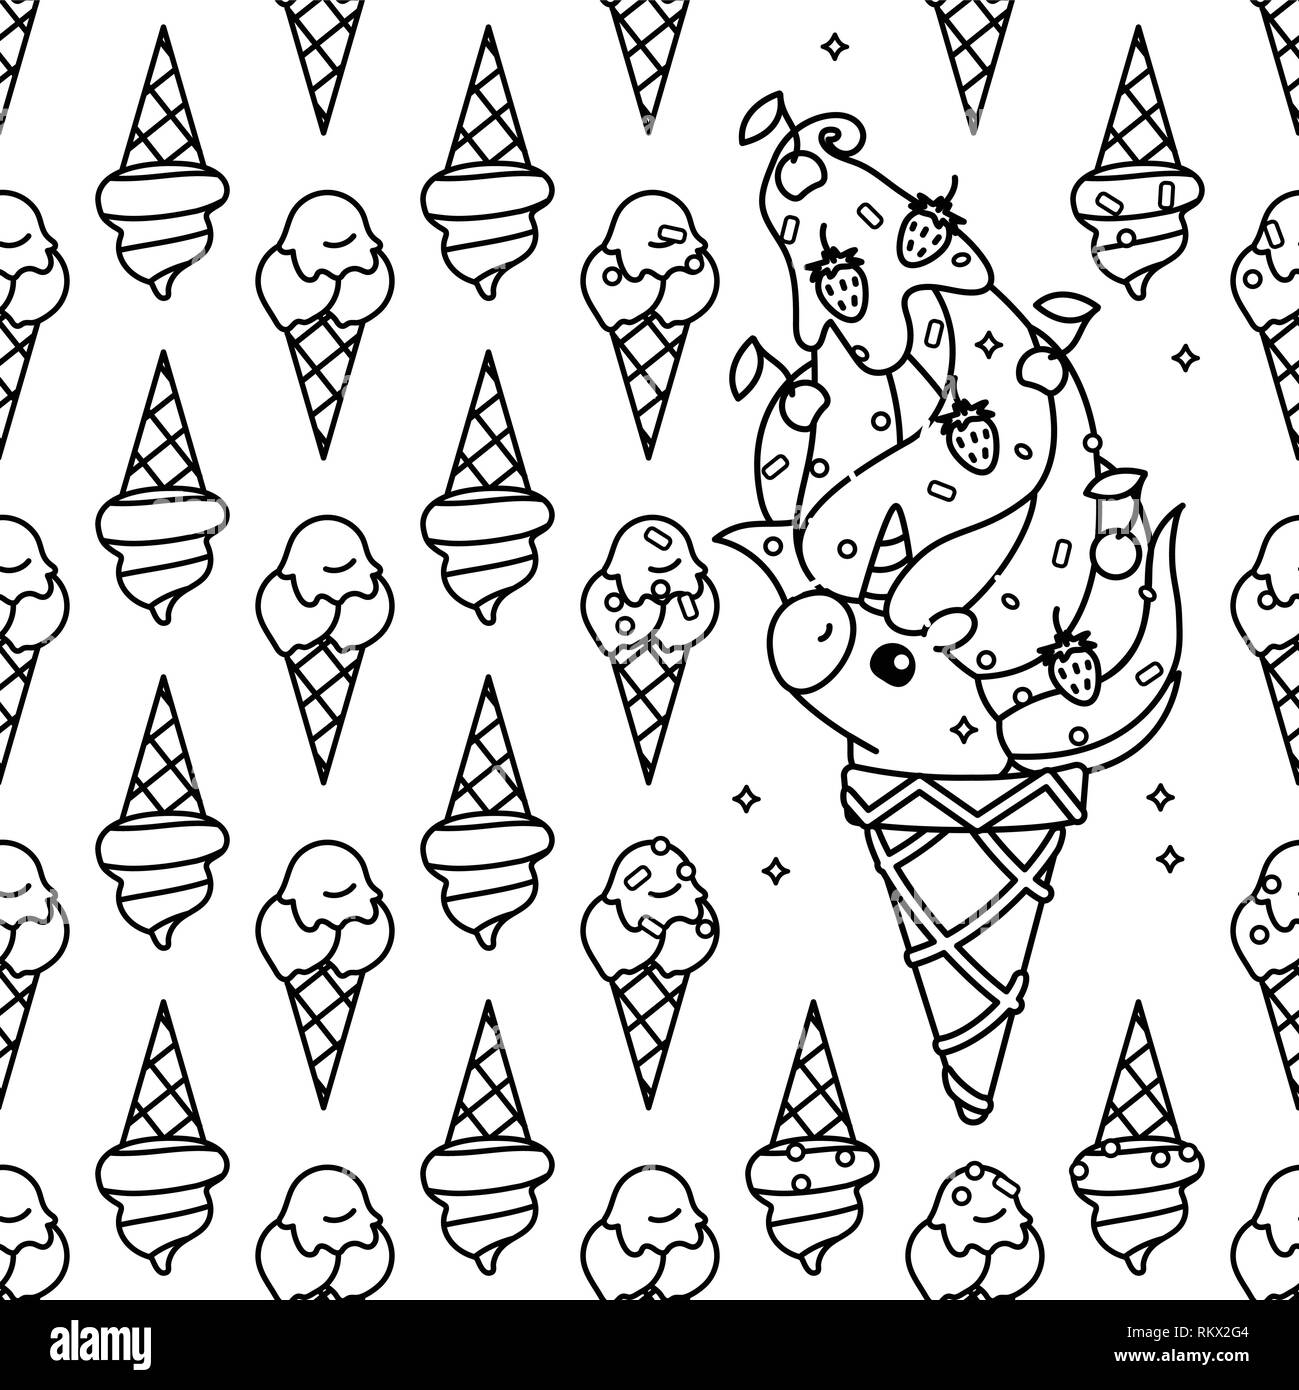 Unicorn Ice Cream Black And White Stock Photos Images Alamy